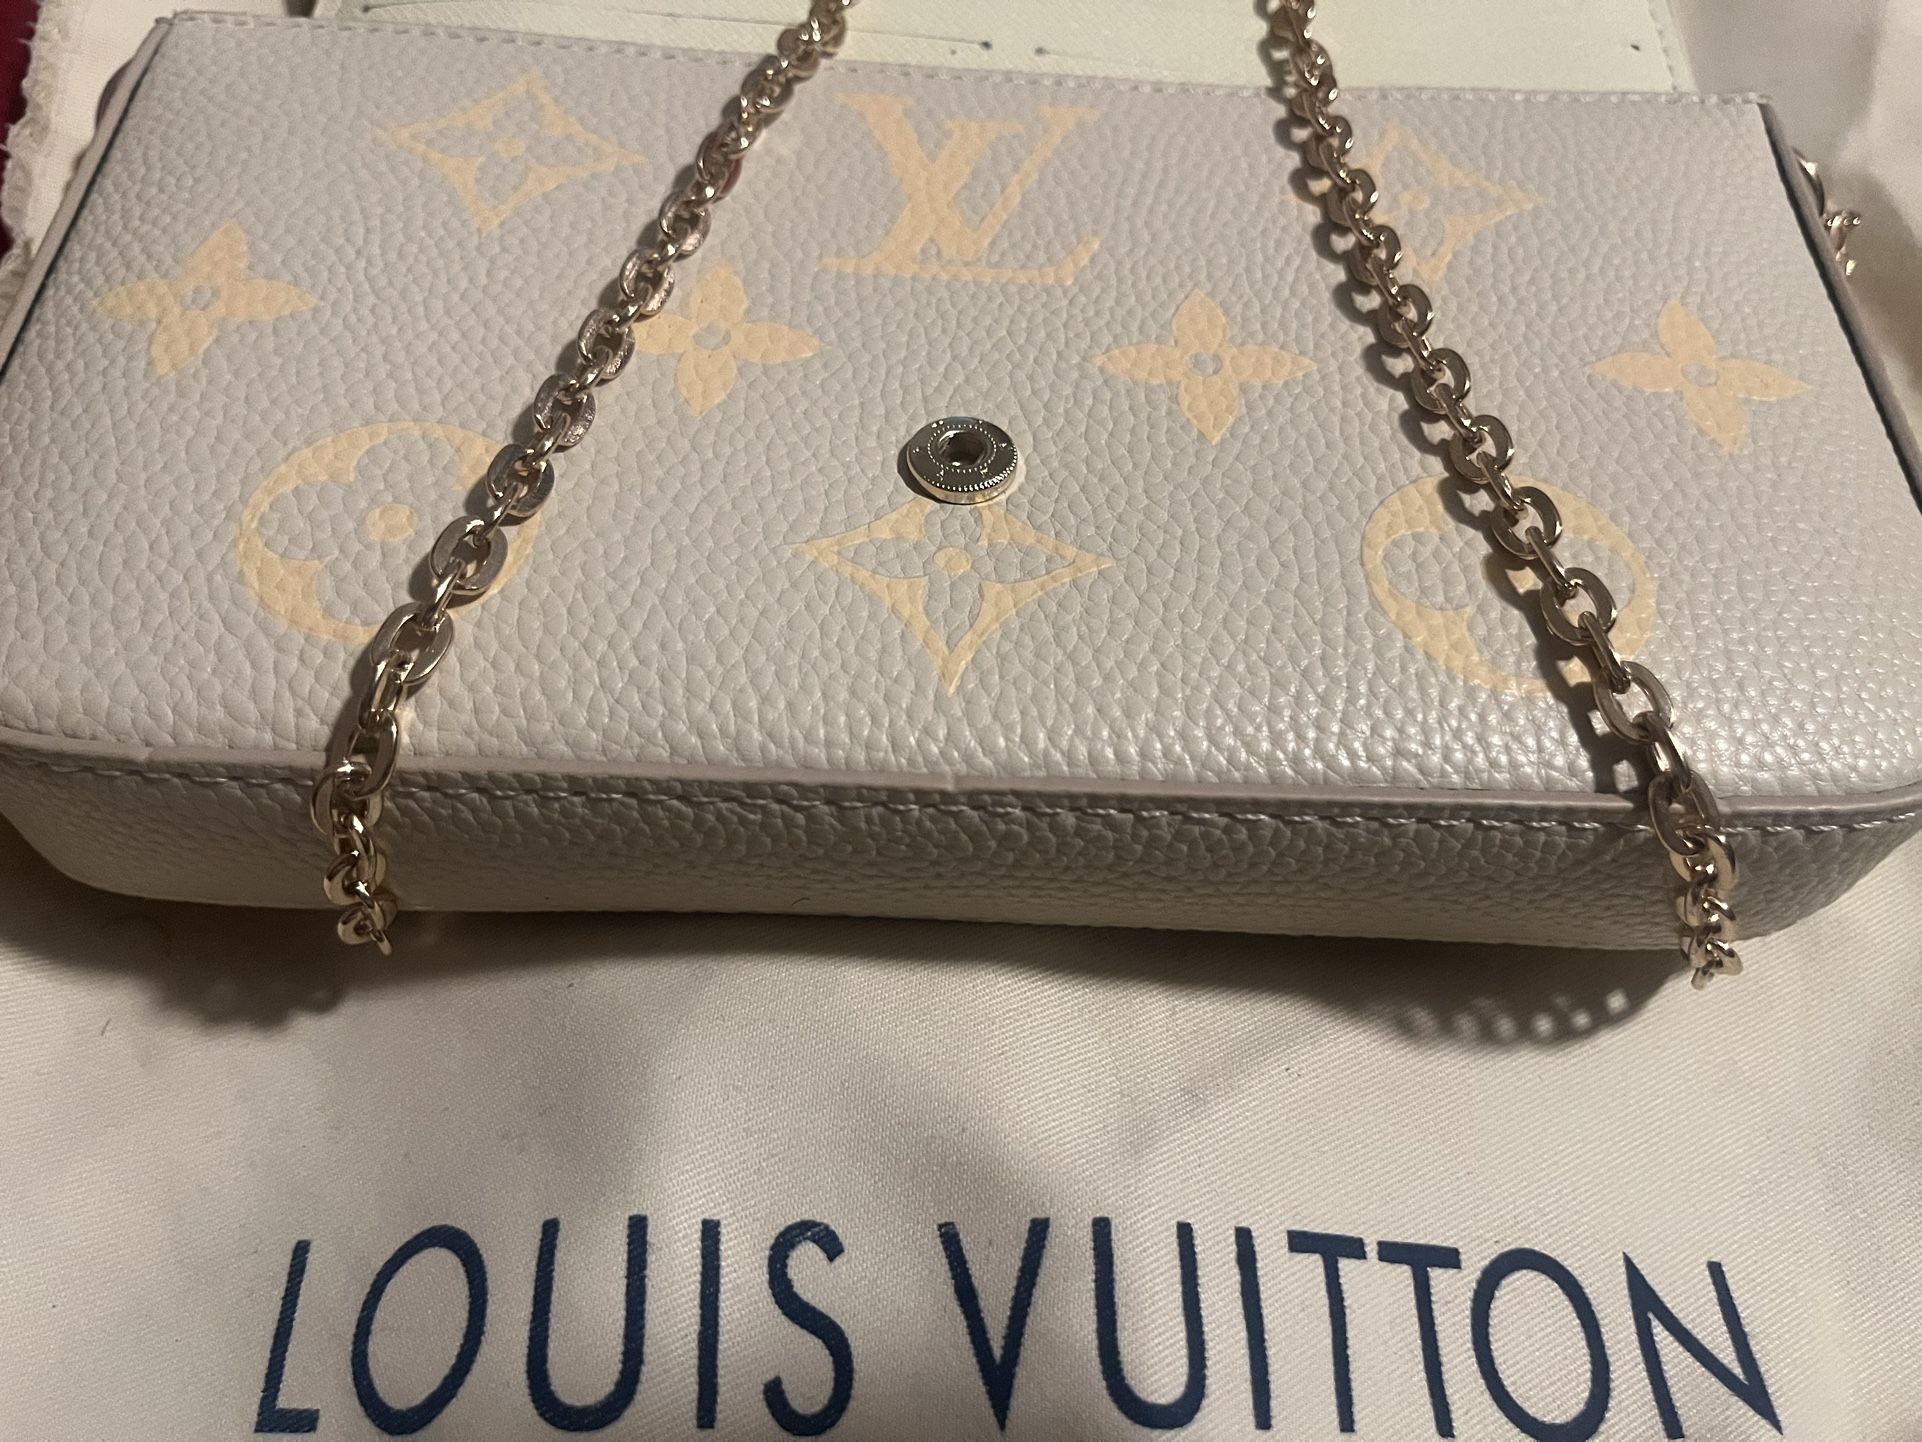 Louis Vuitton Pocket Organizer M67891 for Sale in Lucas, TX - OfferUp